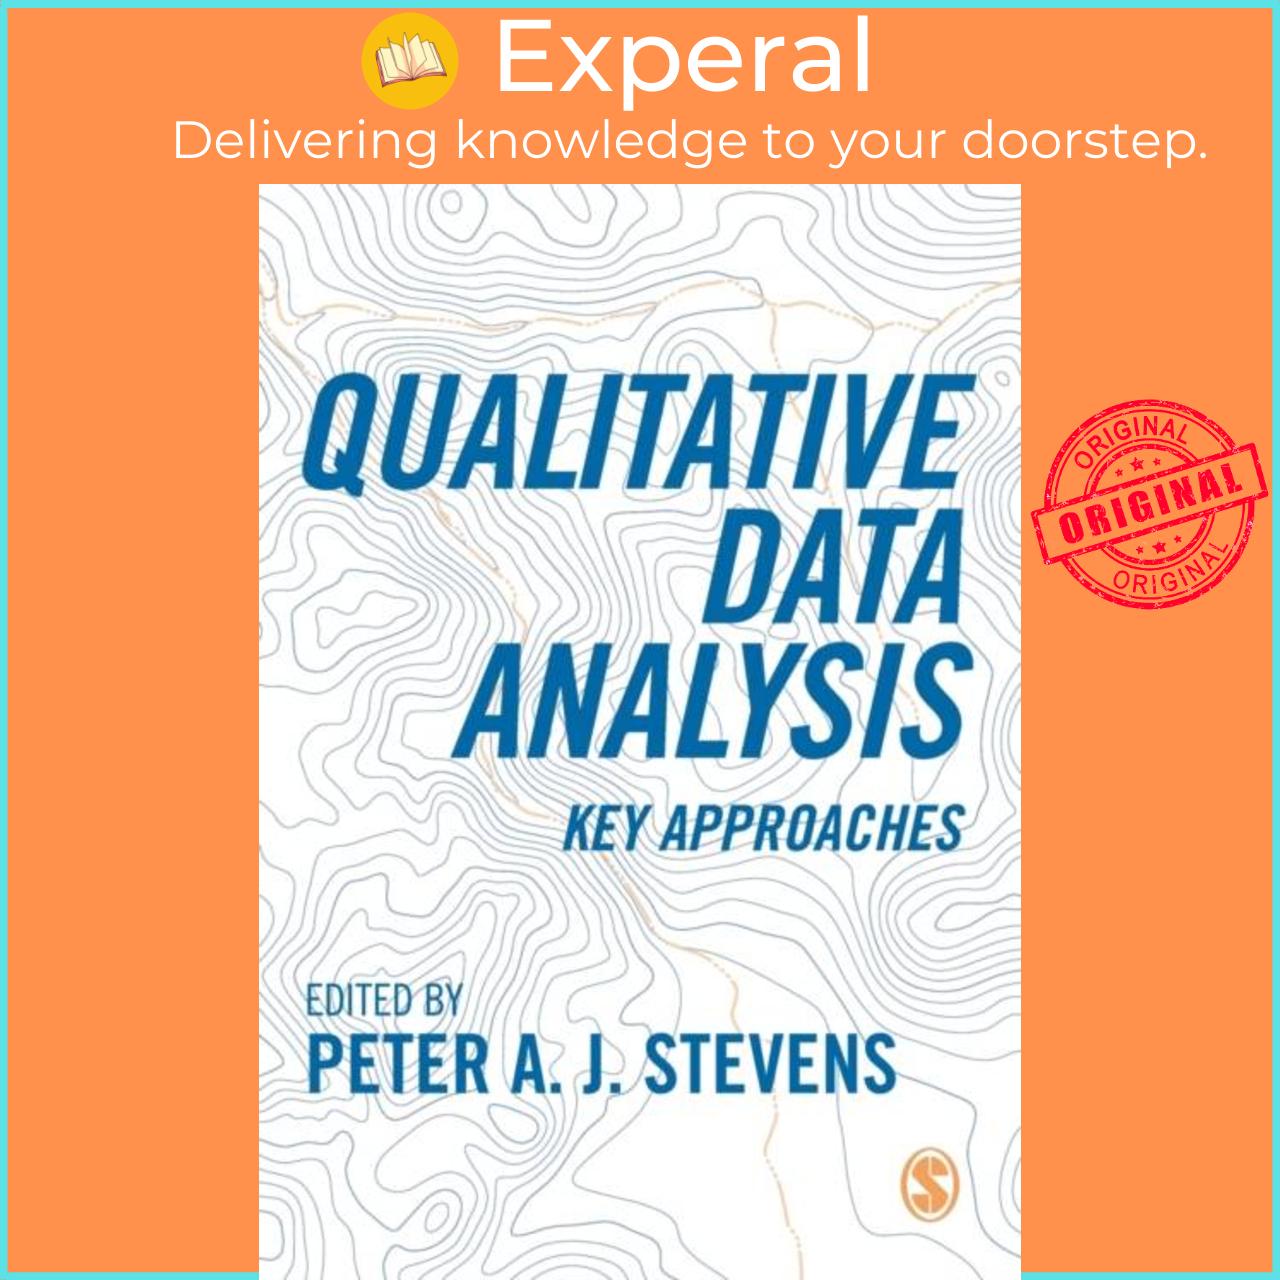 Sách - Qualitative Data Analysis - Key Approaches by Peter A. J. Stevens (UK edition, paperback)